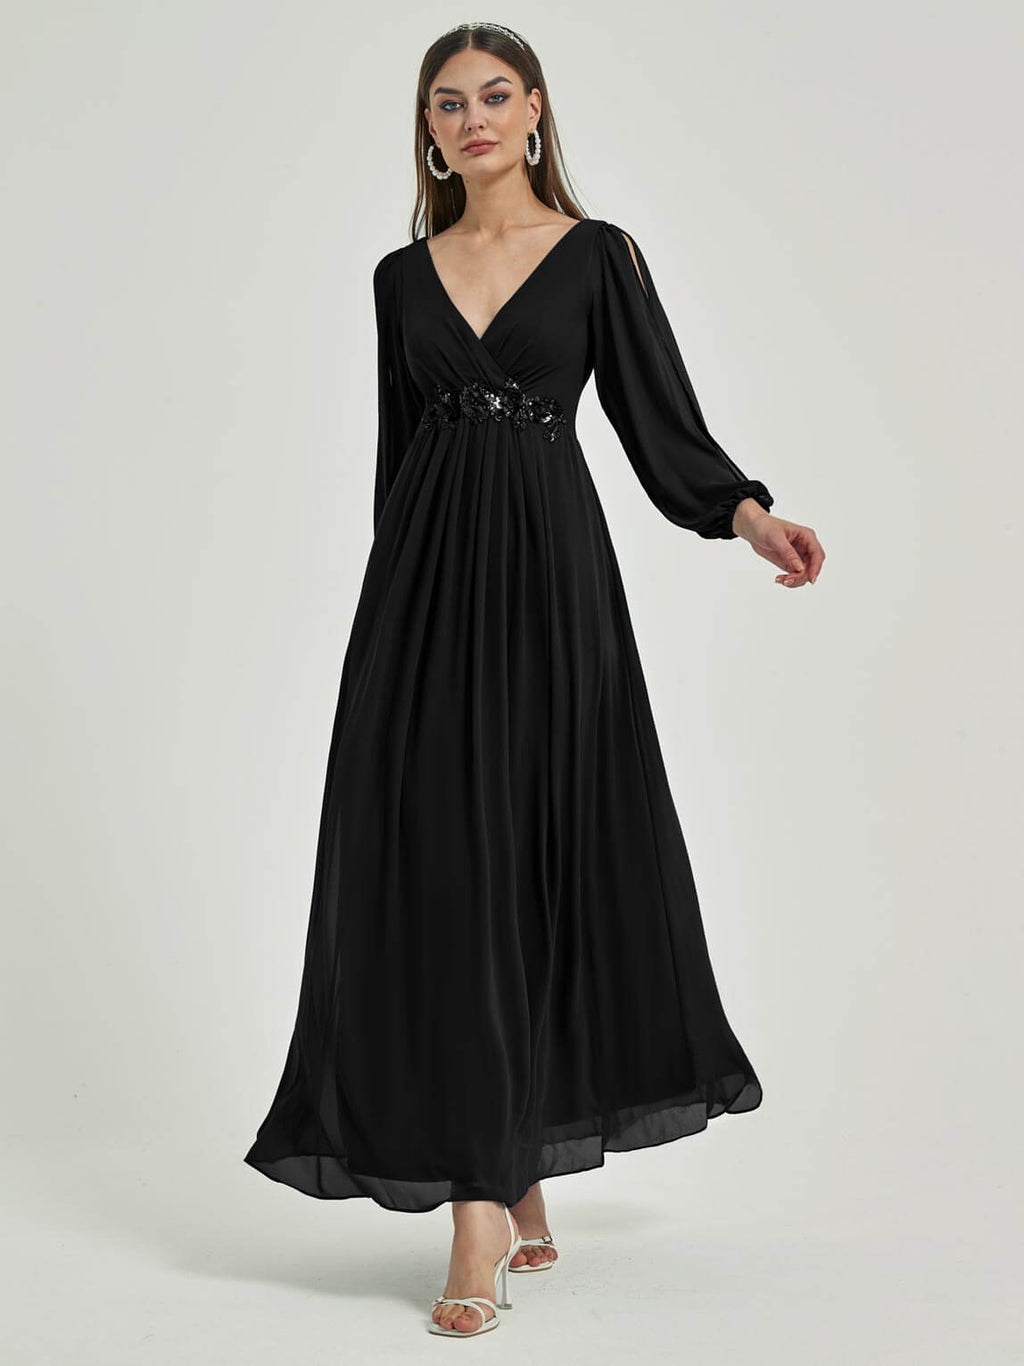 NZ Bridal Black Long Sleeves V Neck Chiffon bridesmaid dresses 00461ep Liv a